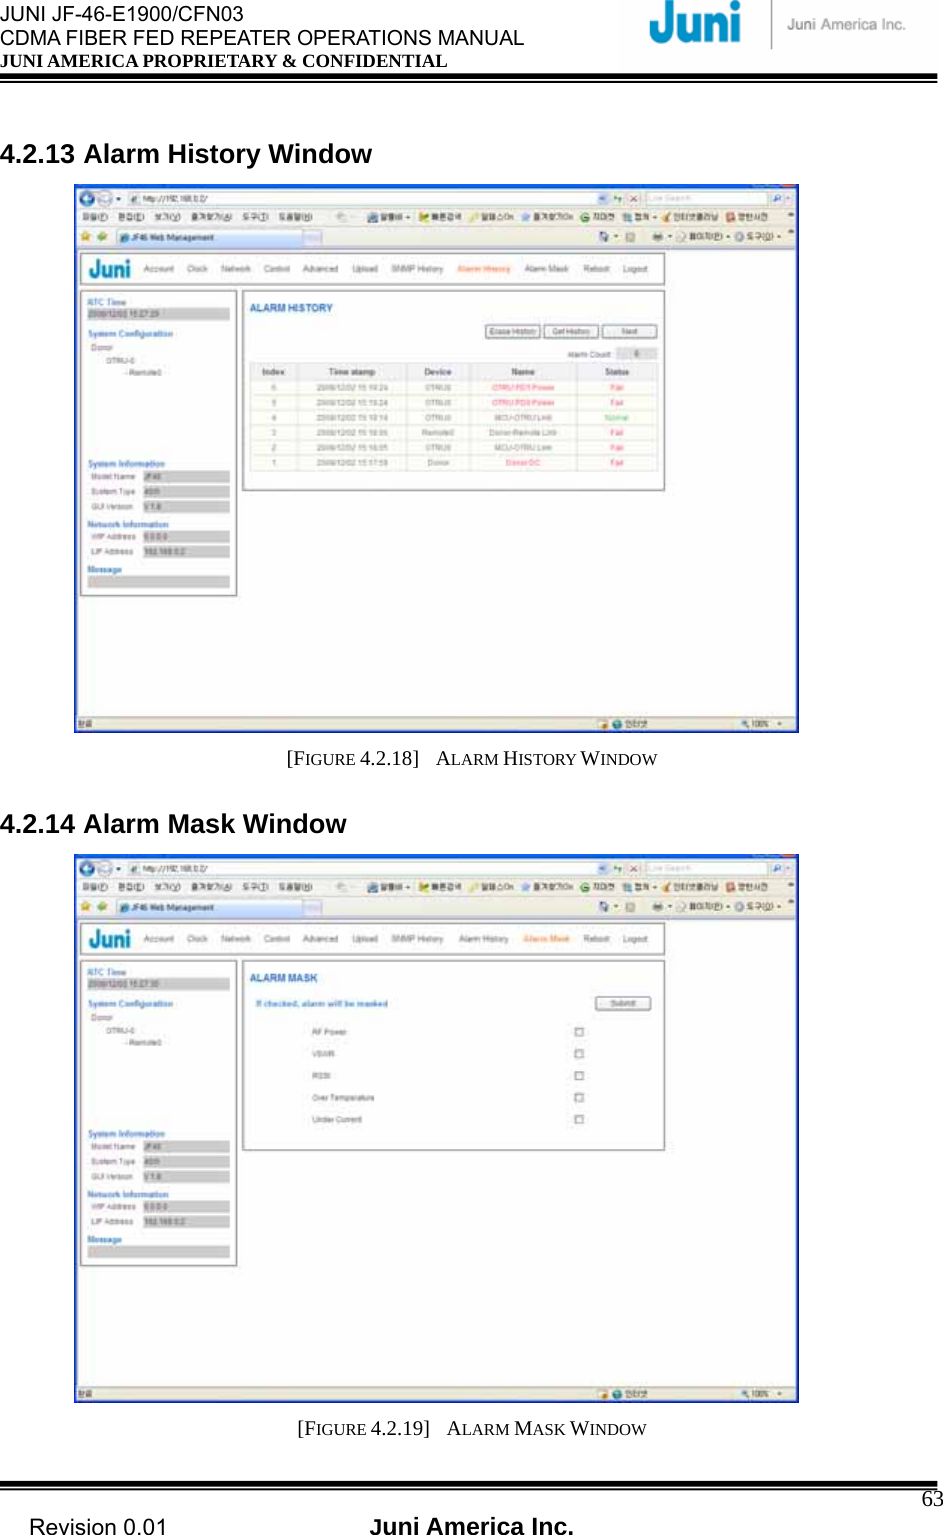  JUNI JF-46-E1900/CFN03 CDMA FIBER FED REPEATER OPERATIONS MANUAL JUNI AMERICA PROPRIETARY &amp; CONFIDENTIAL                                   Revision 0.01  Juni America Inc.  63 4.2.13 Alarm History Window  [FIGURE 4.2.18]  ALARM HISTORY WINDOW  4.2.14 Alarm Mask Window  [FIGURE 4.2.19]  ALARM MASK WINDOW 